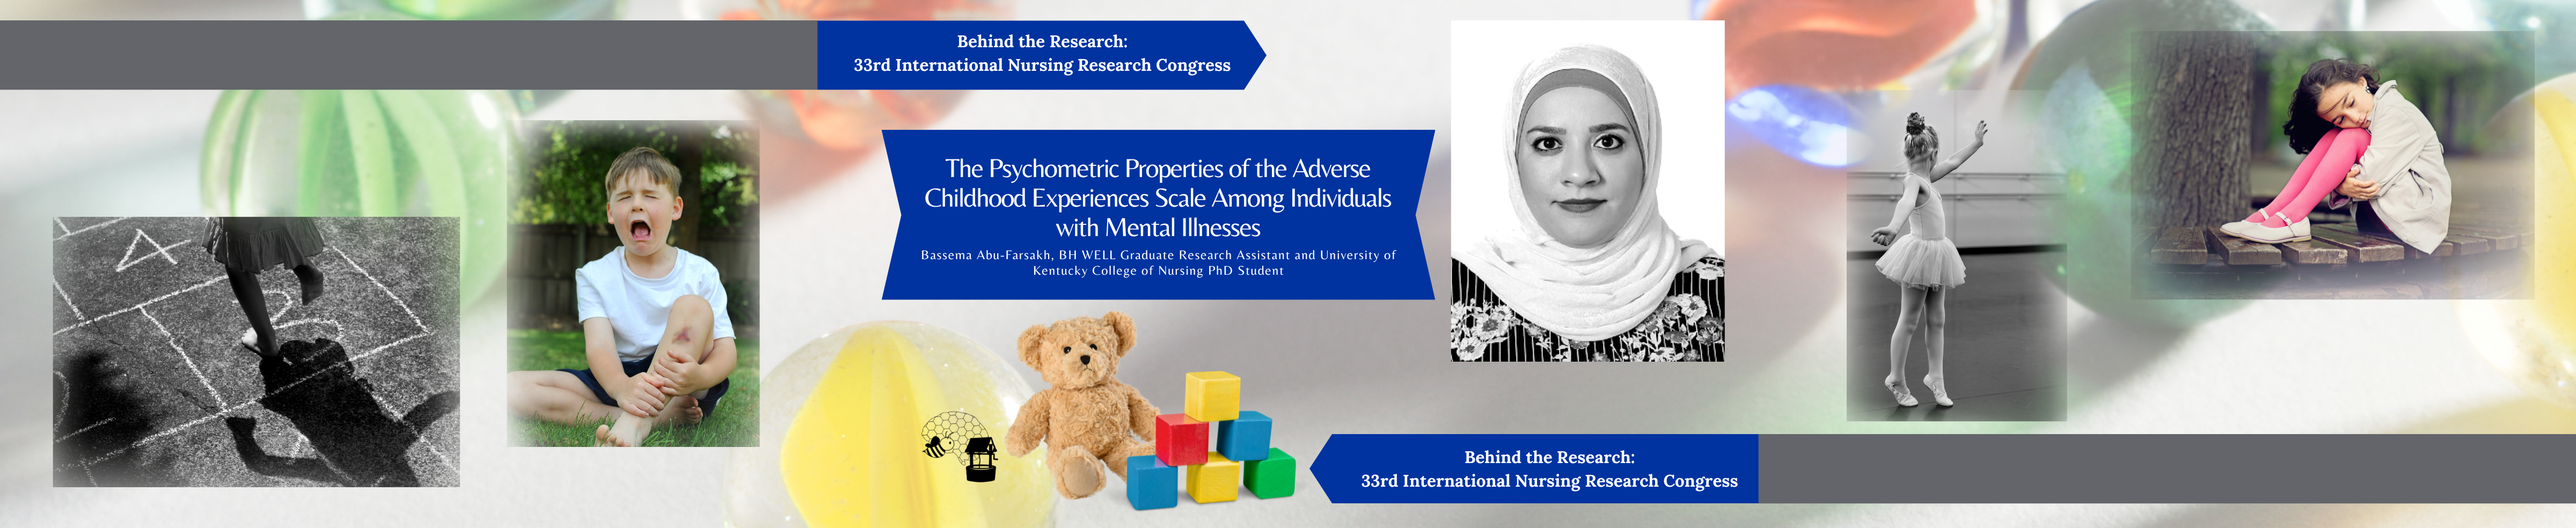 Behind the Research: Bassema Abu-Farsakh